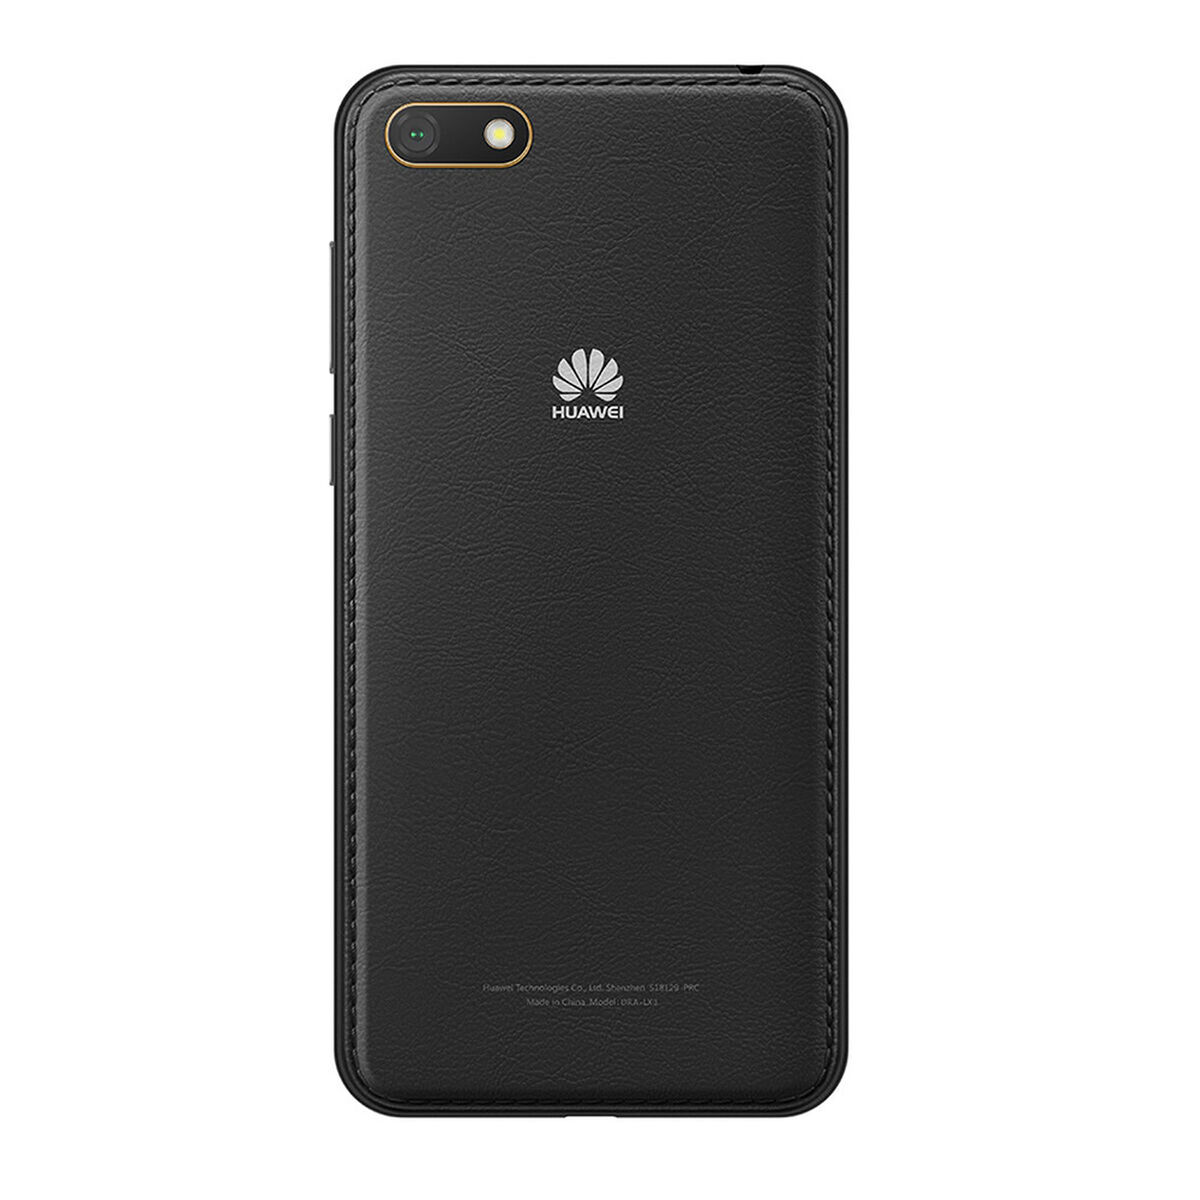 Черные телефоны huawei. Смартфон Huawei y5 Lite (2018);. Huawei y5 Lite Modern Black Dra-lx5. Смартфон Huawei y5 Lite 16gb. Huawei y5 Lite Dra-lx5.